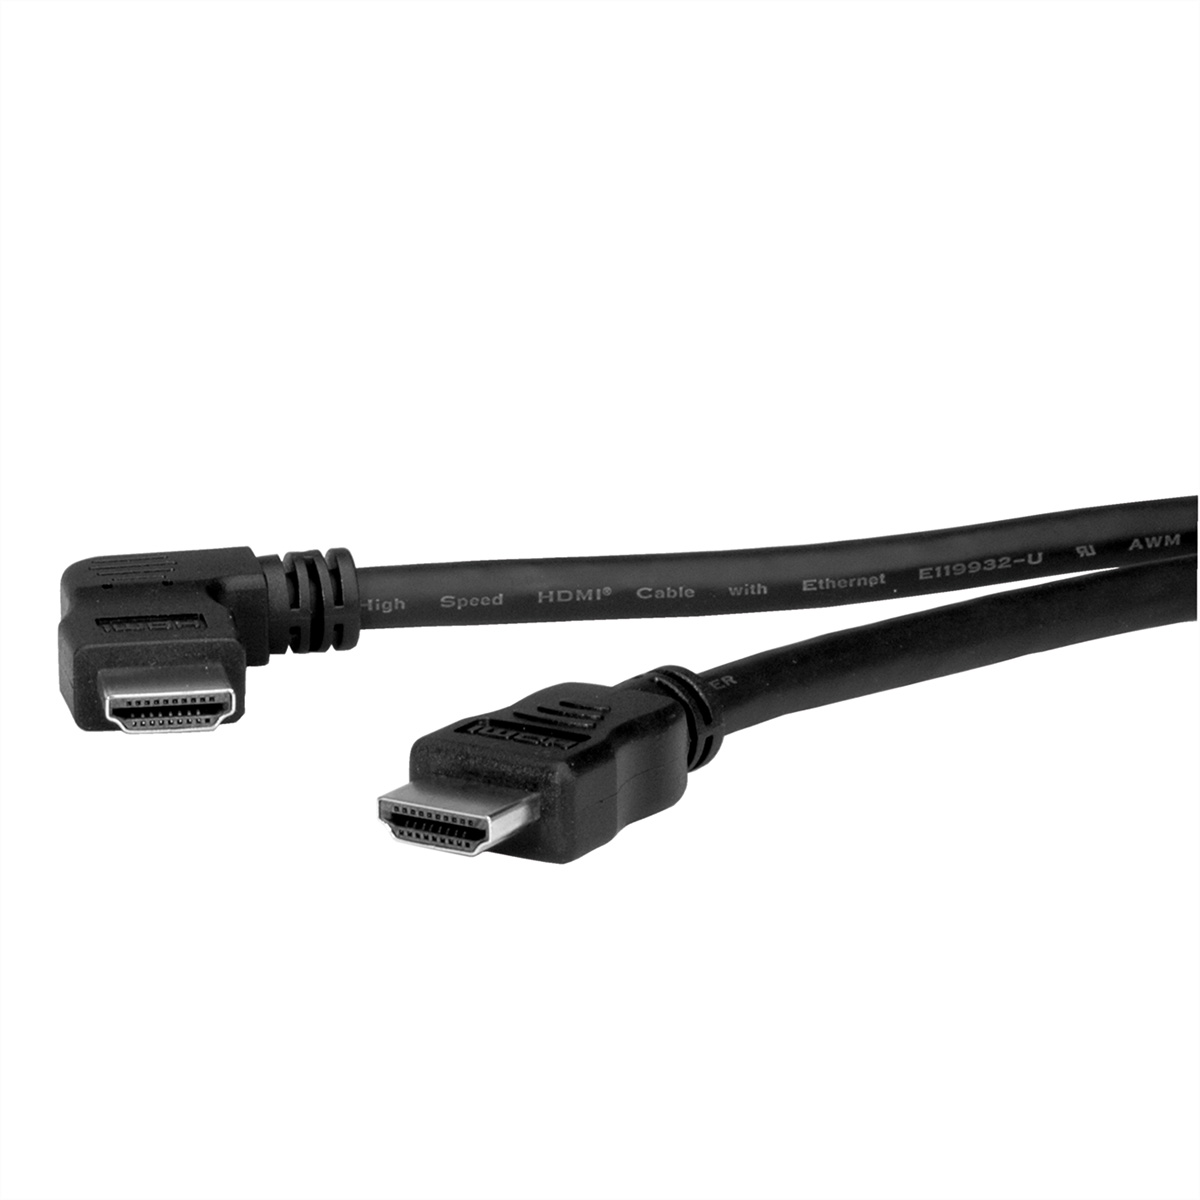 ROLINE HDMI High Ethernet Speed mit Kabel linksgewinkelt mit HDMI Ethernet, Speed Kabel High